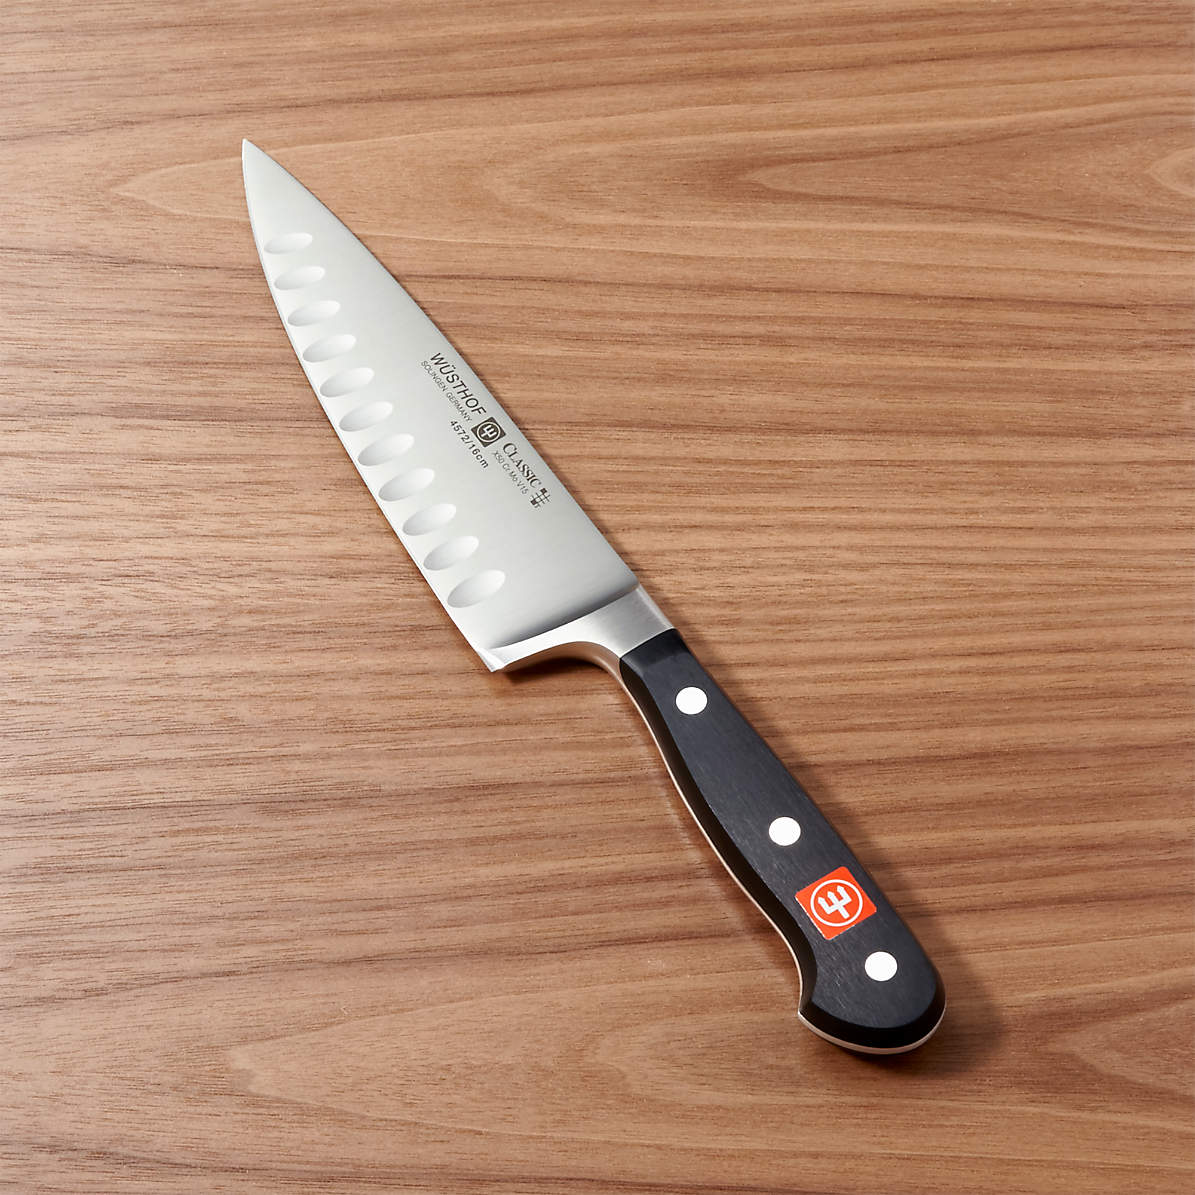 Недорогие кухонные ножи. Кухонные ножи Zwilling. Wusthof Cleaver 4680 18 cm Chef Knife. Ножи Wusthof amici. Шеф нож Борк.